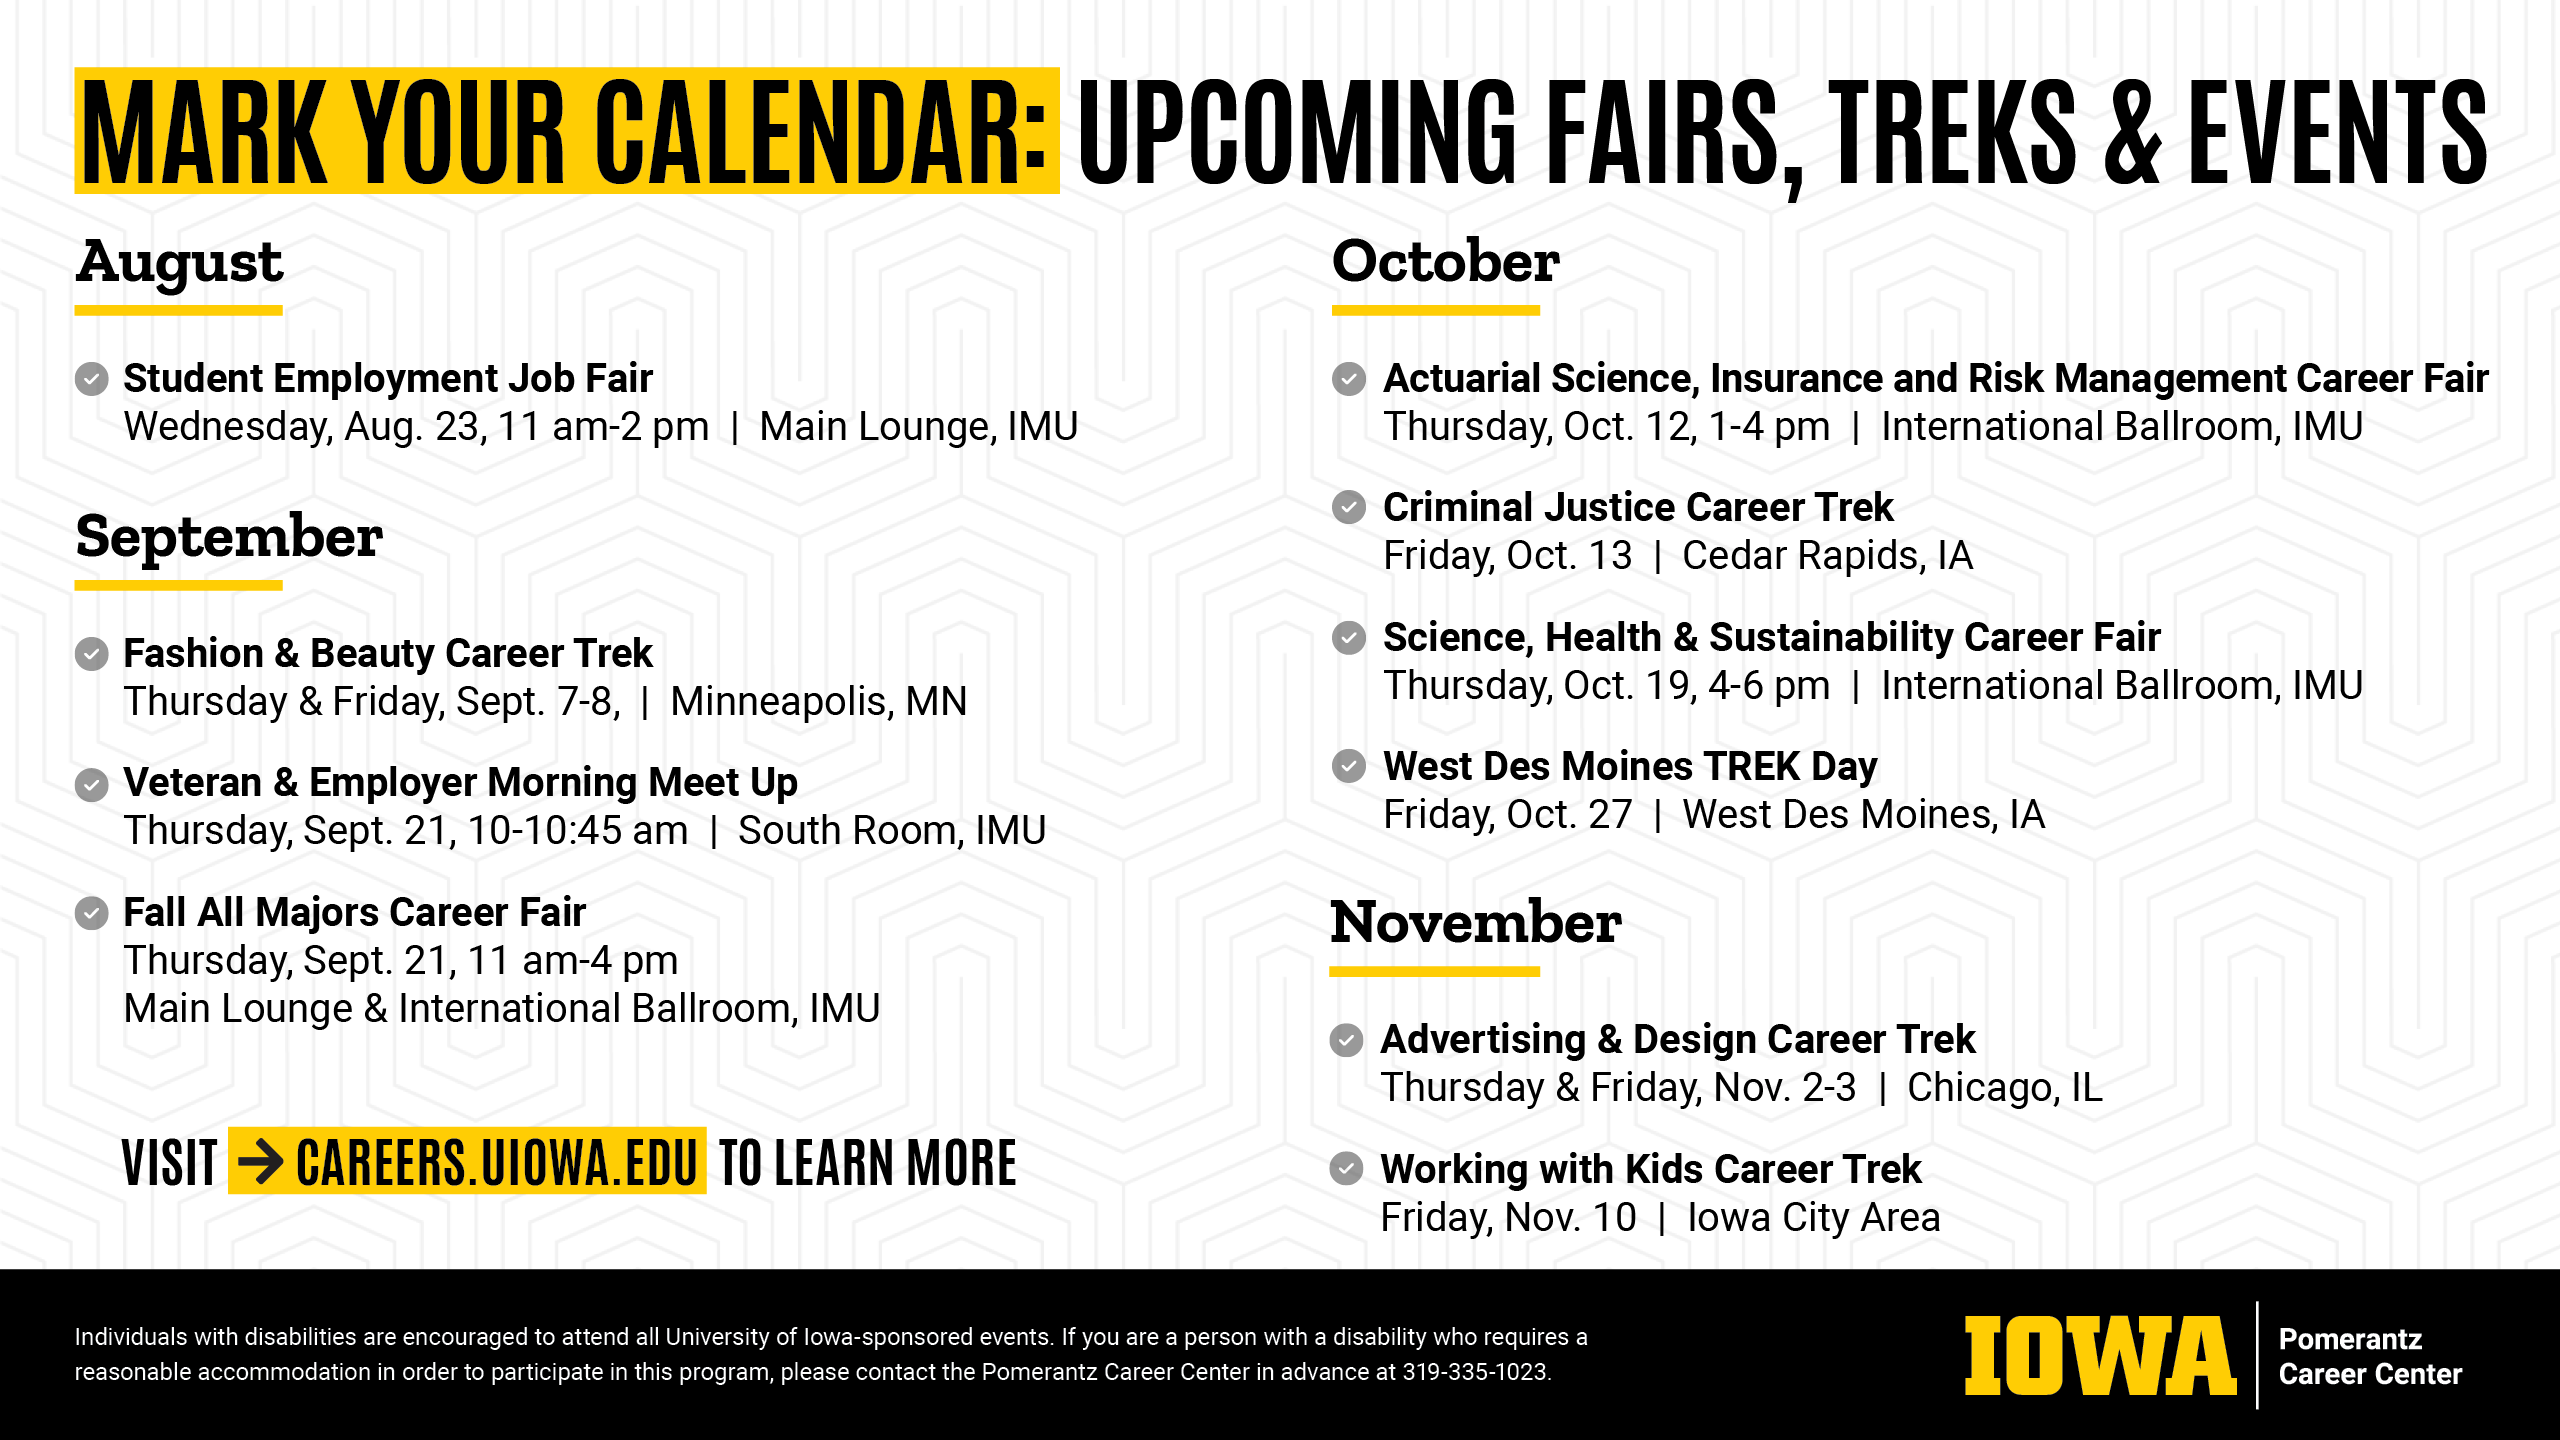 Mark your calendar: Upcoming fairs, treks & events